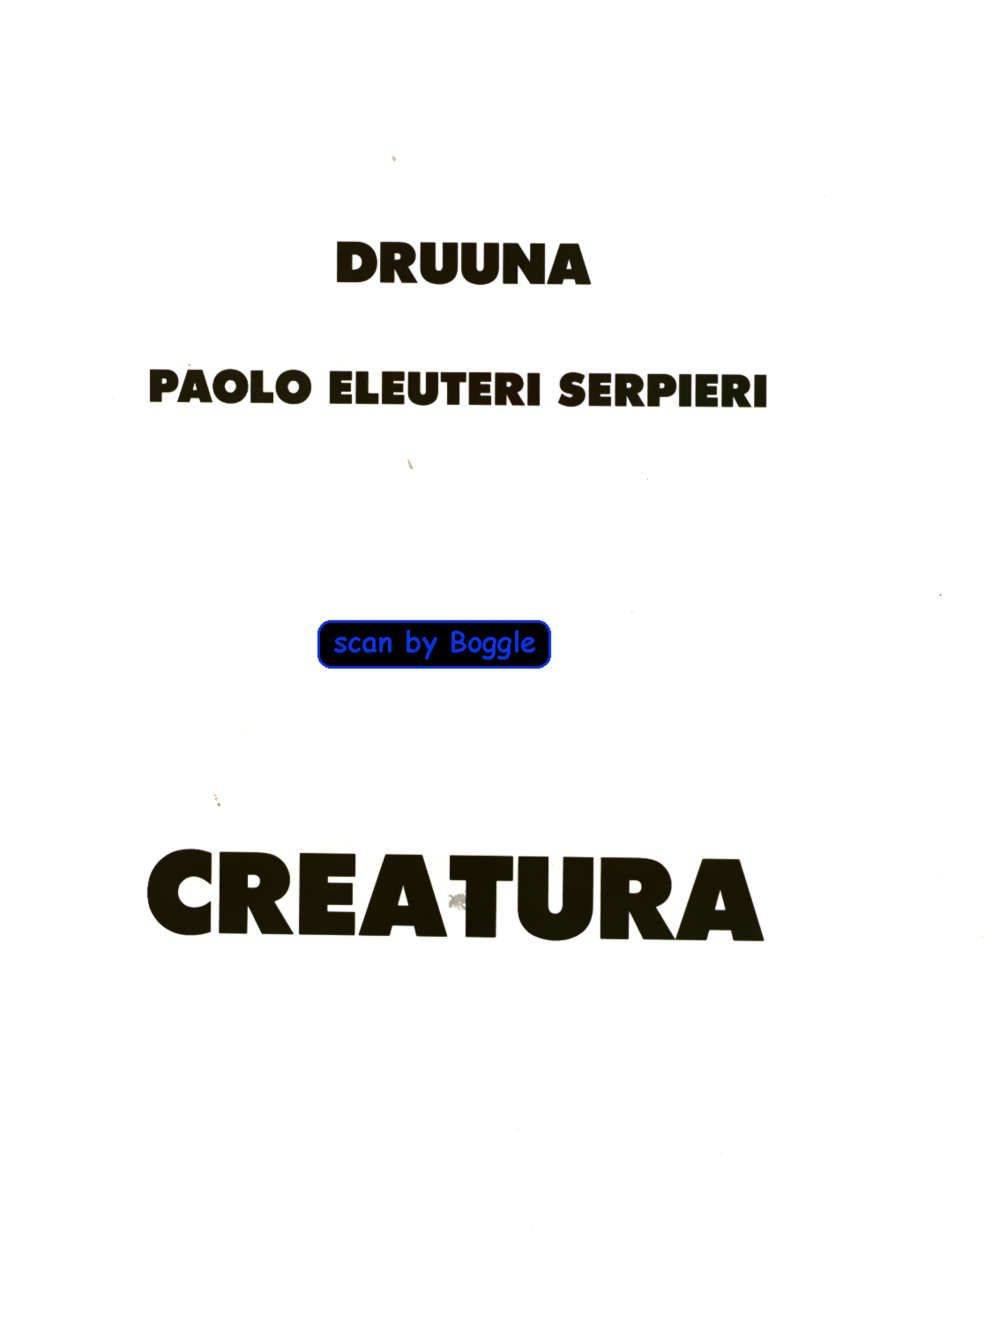 [Paolo Eleuteri Serpieri] Druuna Vol. 3 - Creatura [French] 